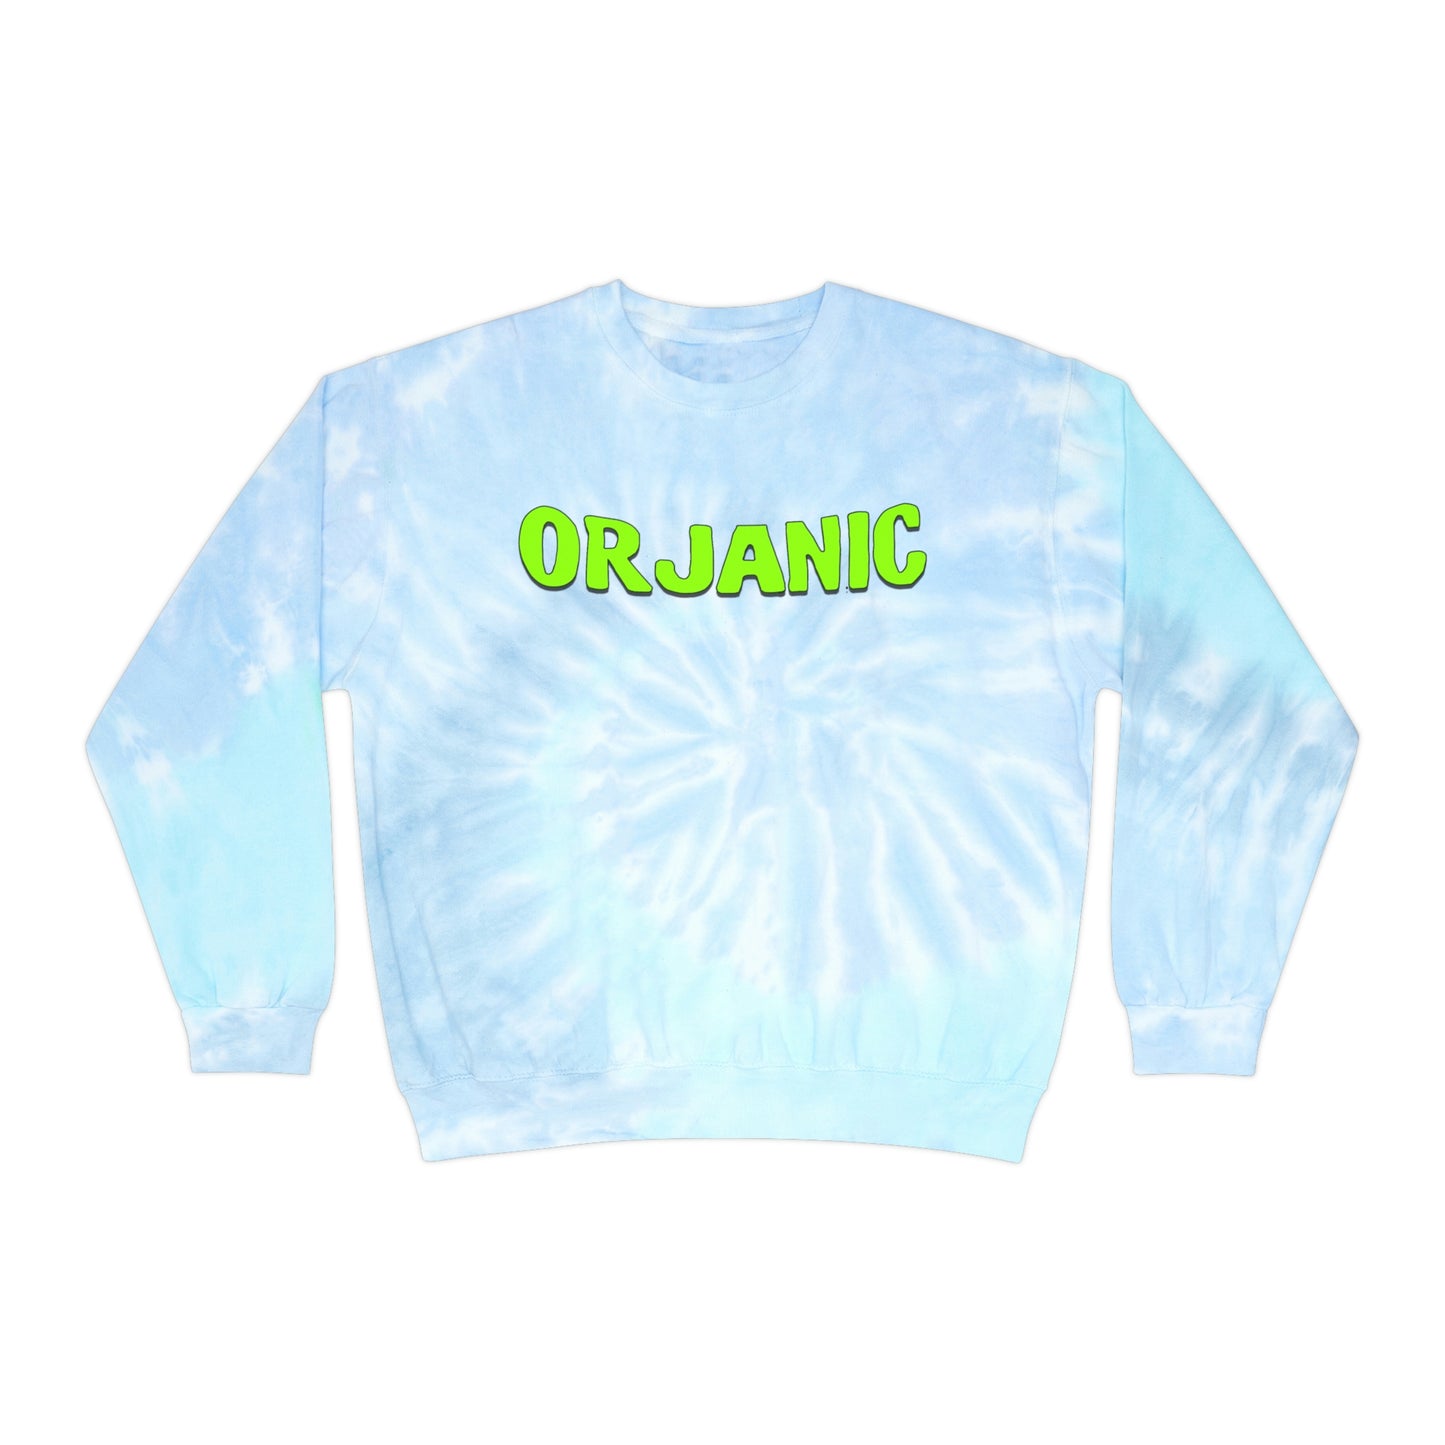 Orjanic Unisex Tie-Dye Sweatshirt